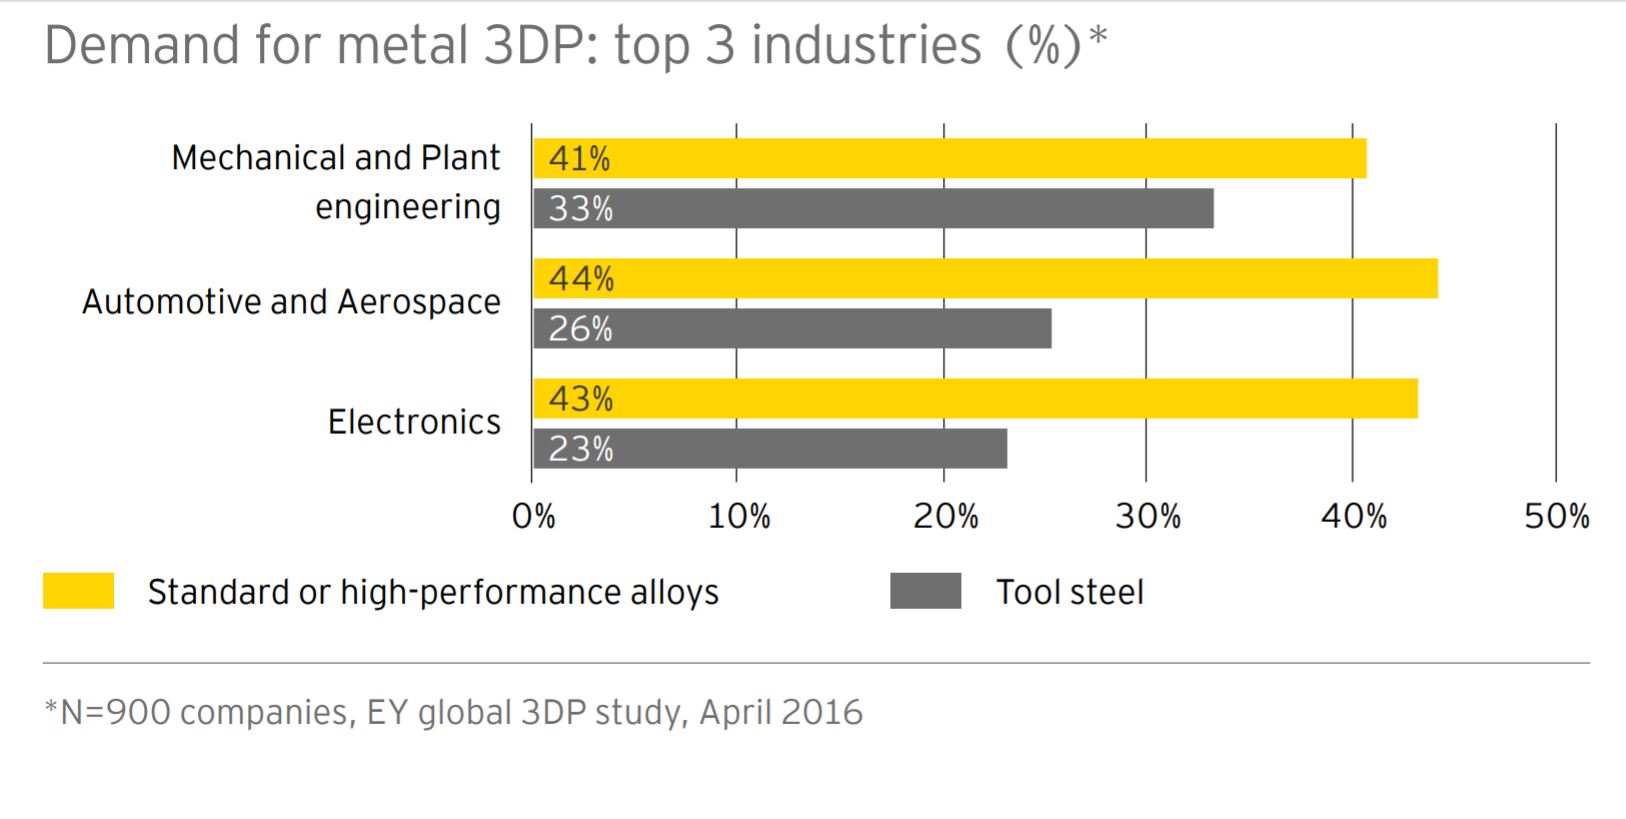 Top 3 demanded industries for metal 3D printing